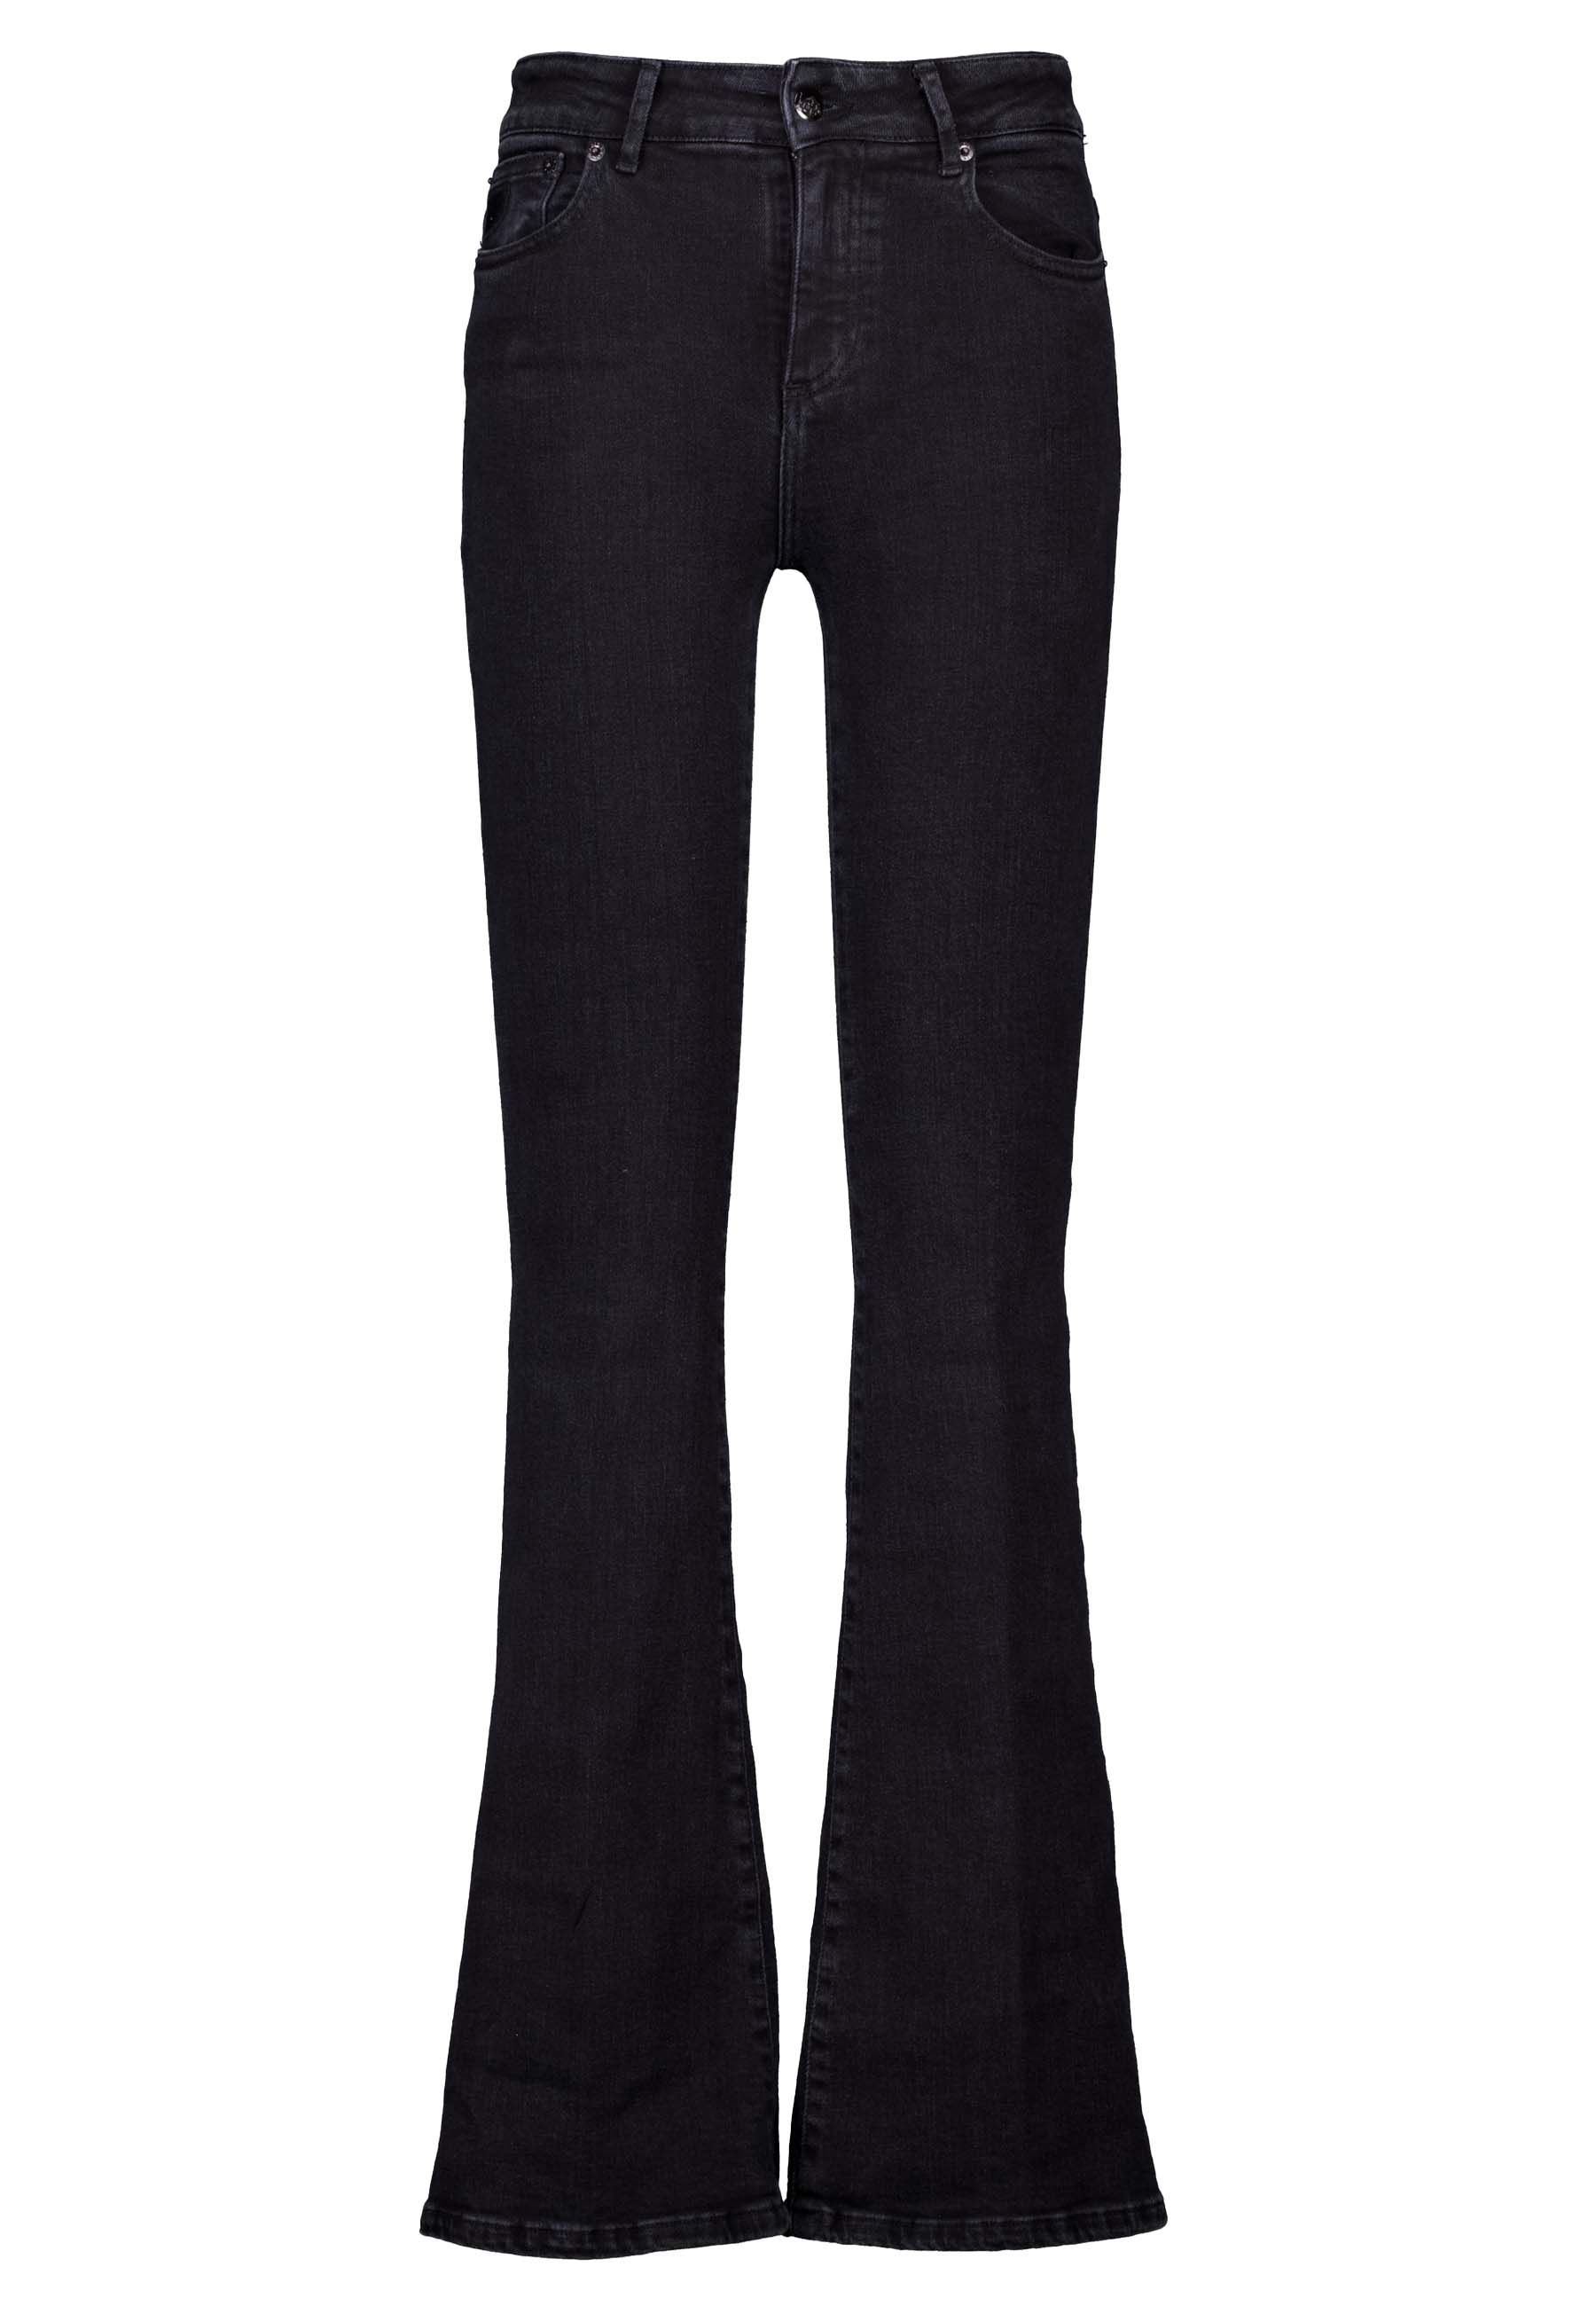 Lois Raval 16 caspar jeans zwart Dames maat 32/32